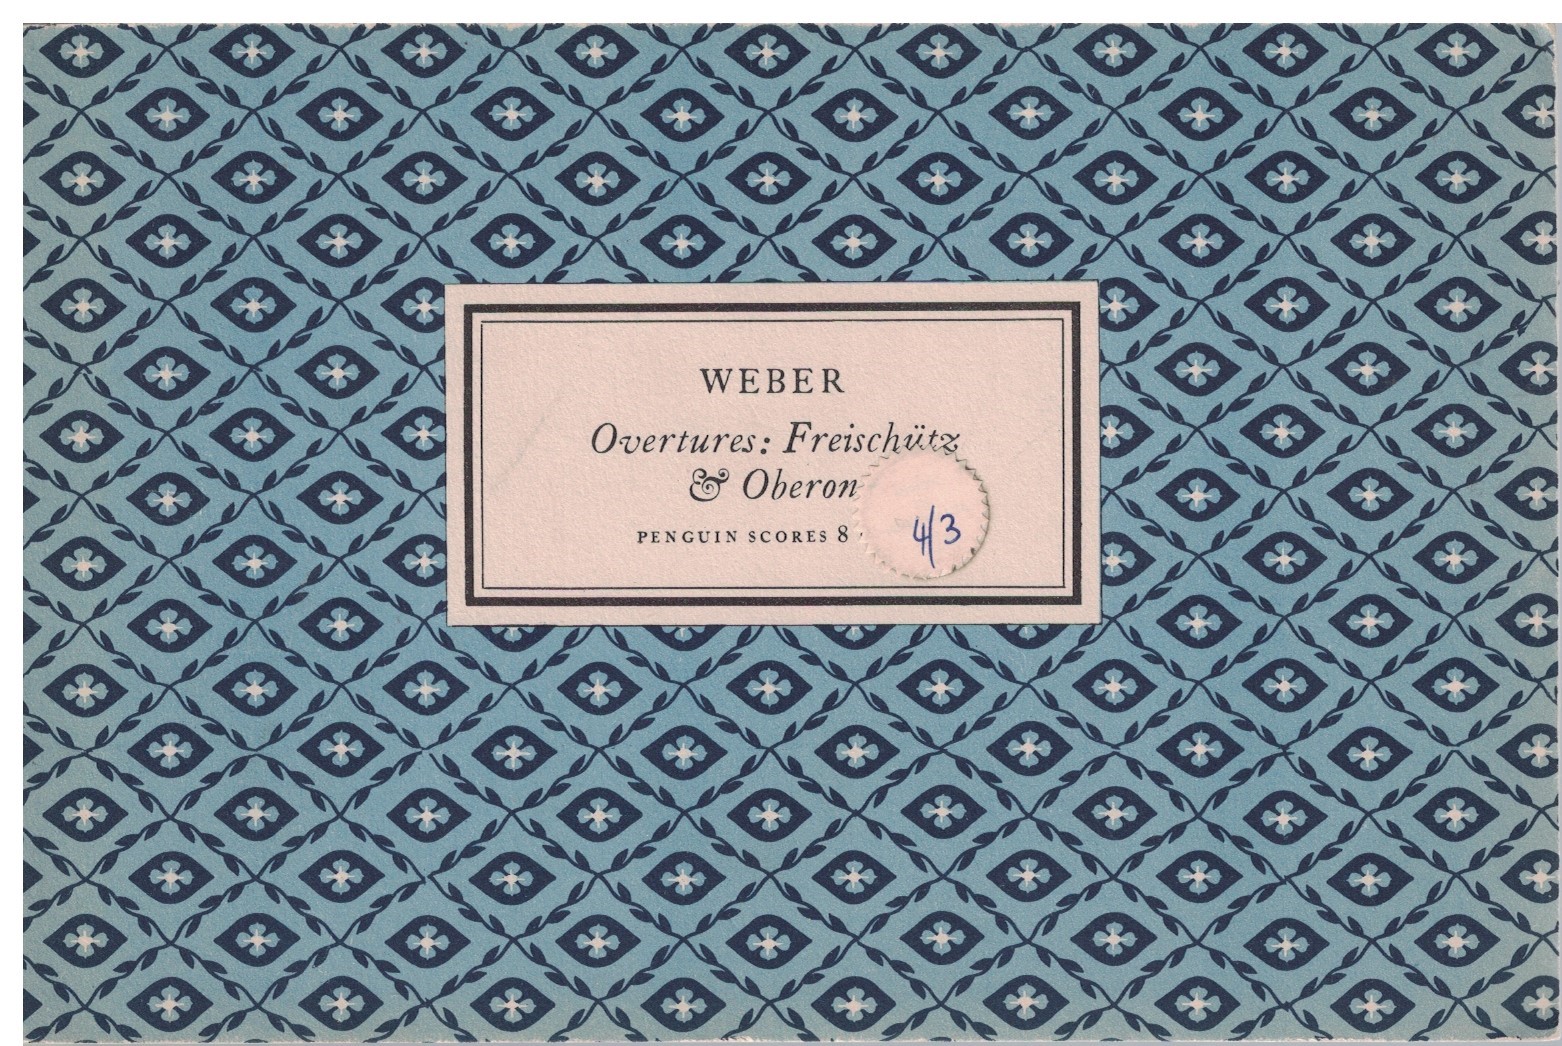 Weber Overtures: Freischutz and Oberon for Orchestra Miniature Study Score